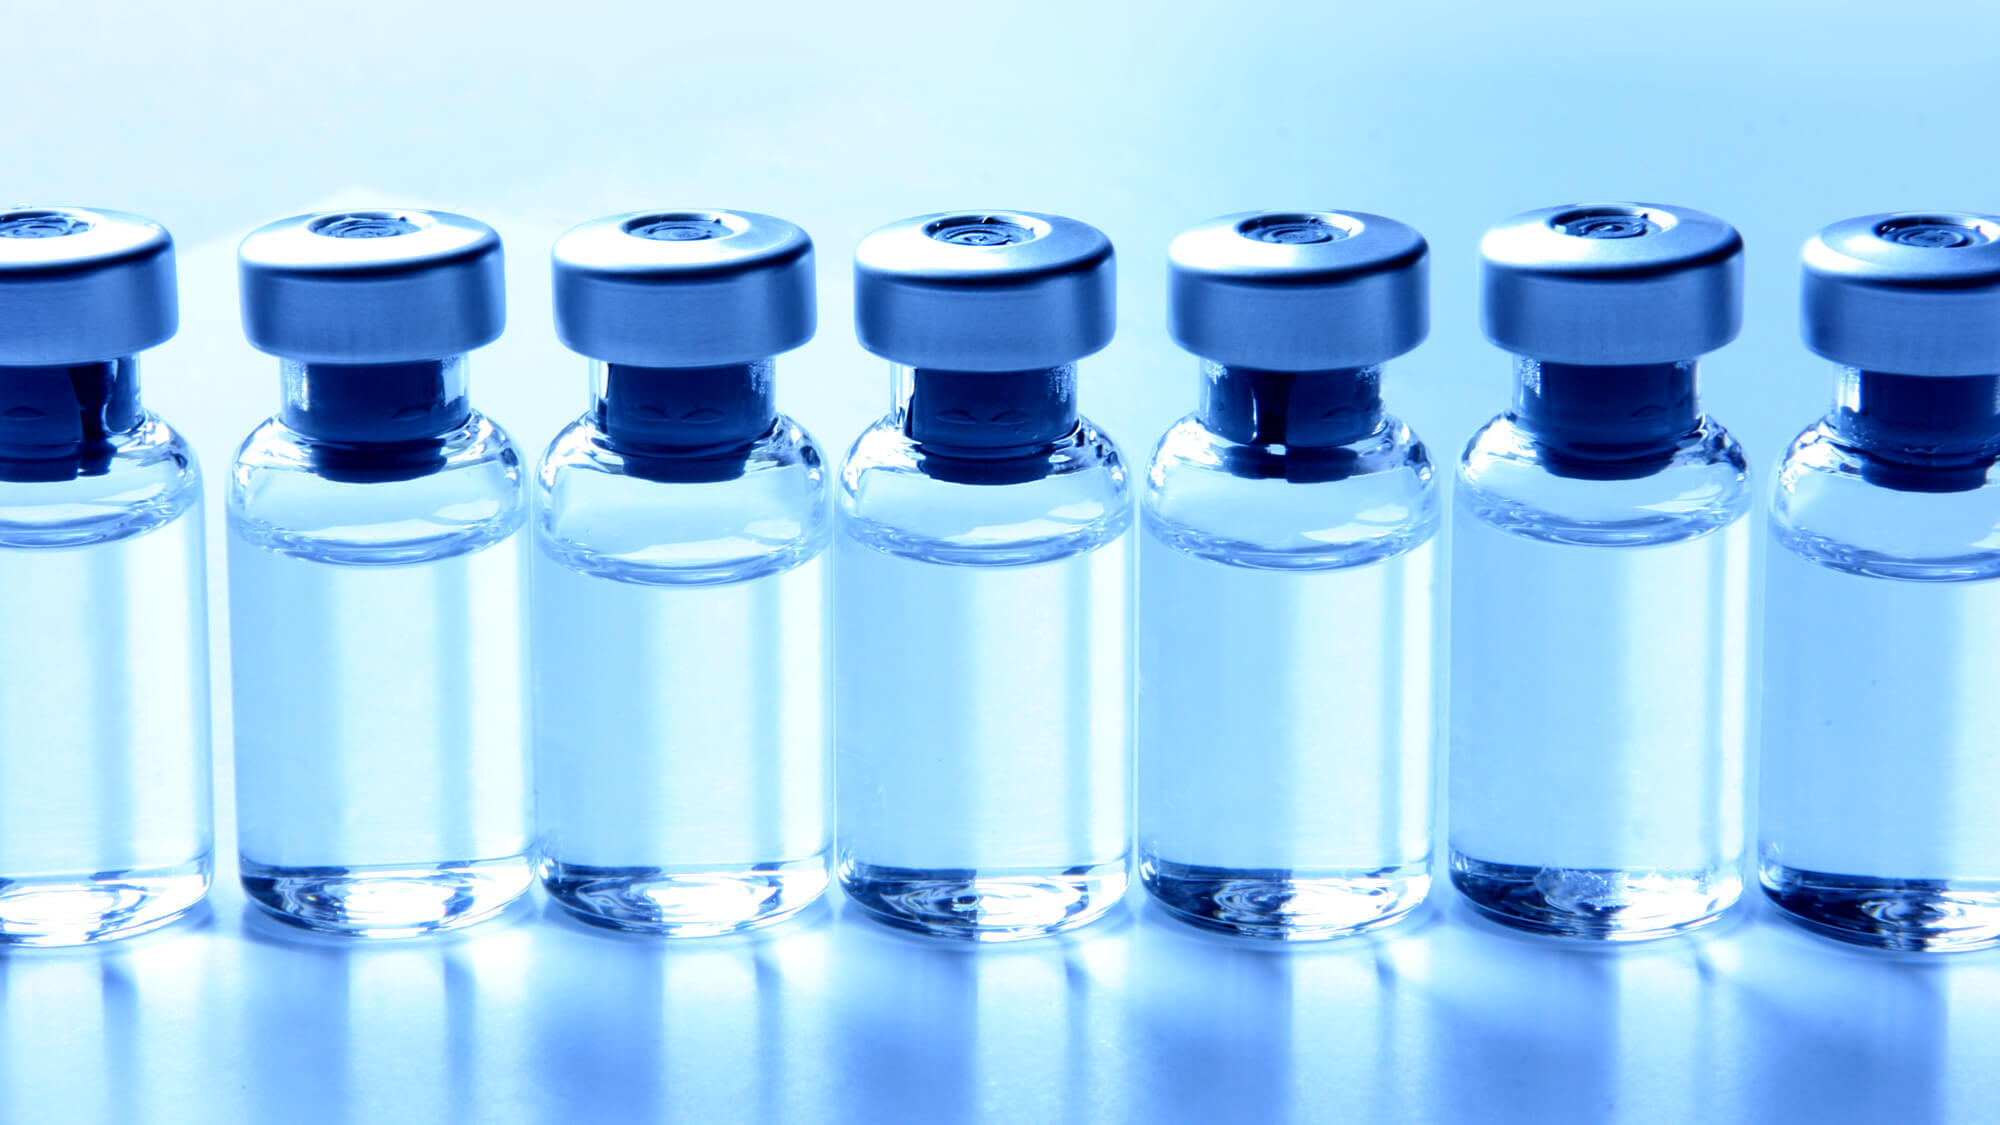 PH renews call for equitable COVID-19 vaccine distribution